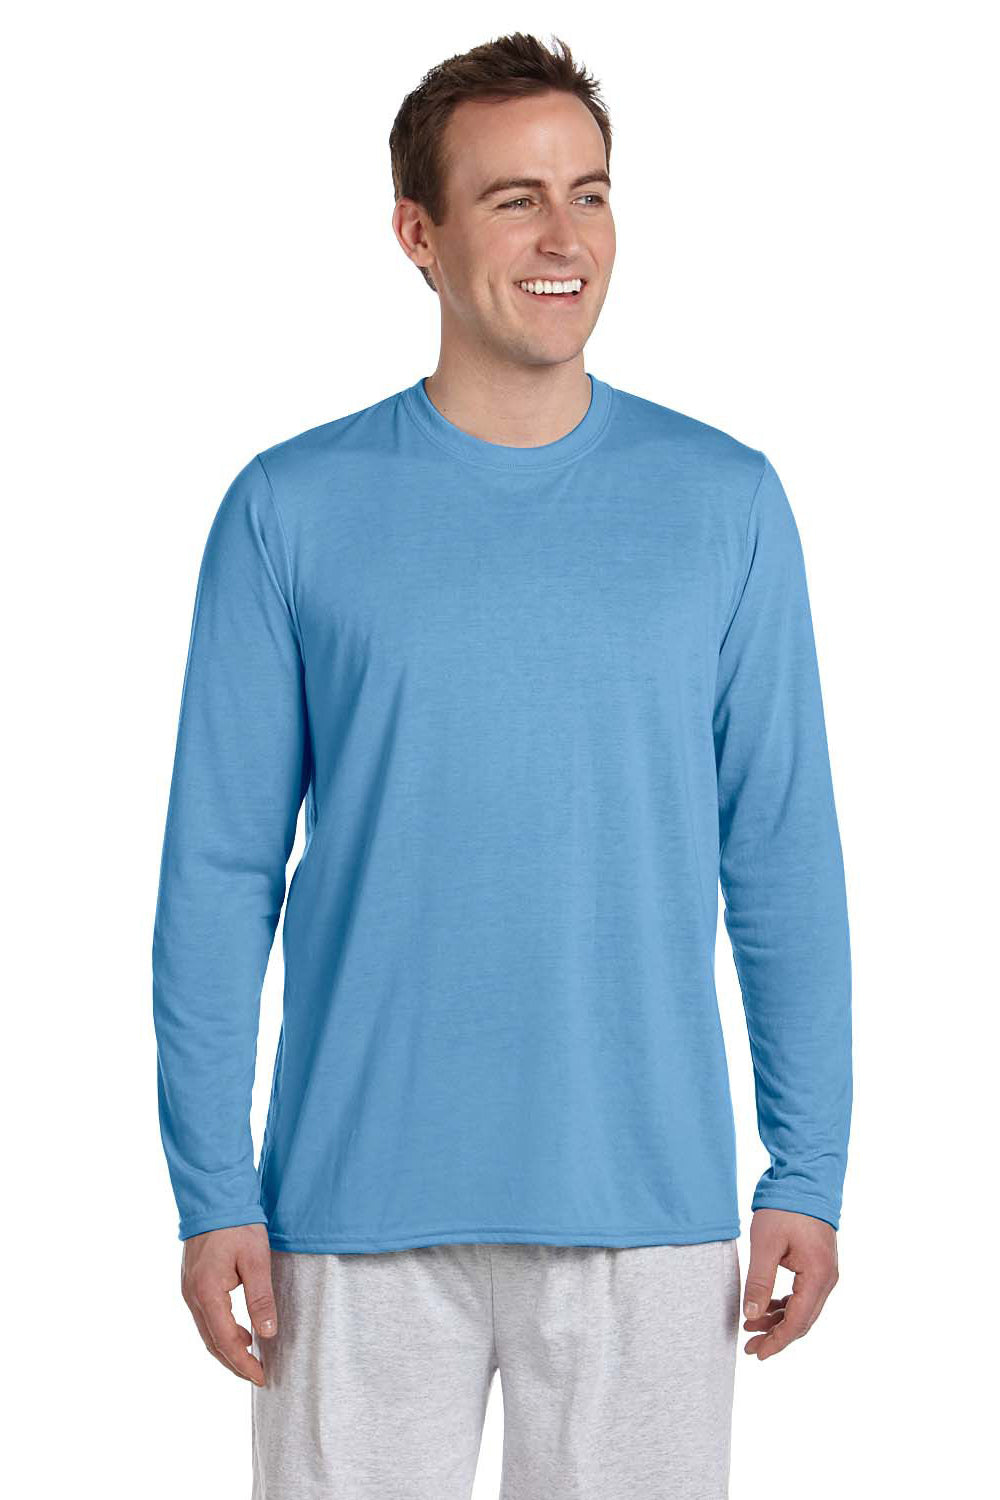 Gildan G424 Mens Performance Jersey Moisture Wicking Long Sleeve Crewneck T-Shirt Carolina Blue Front